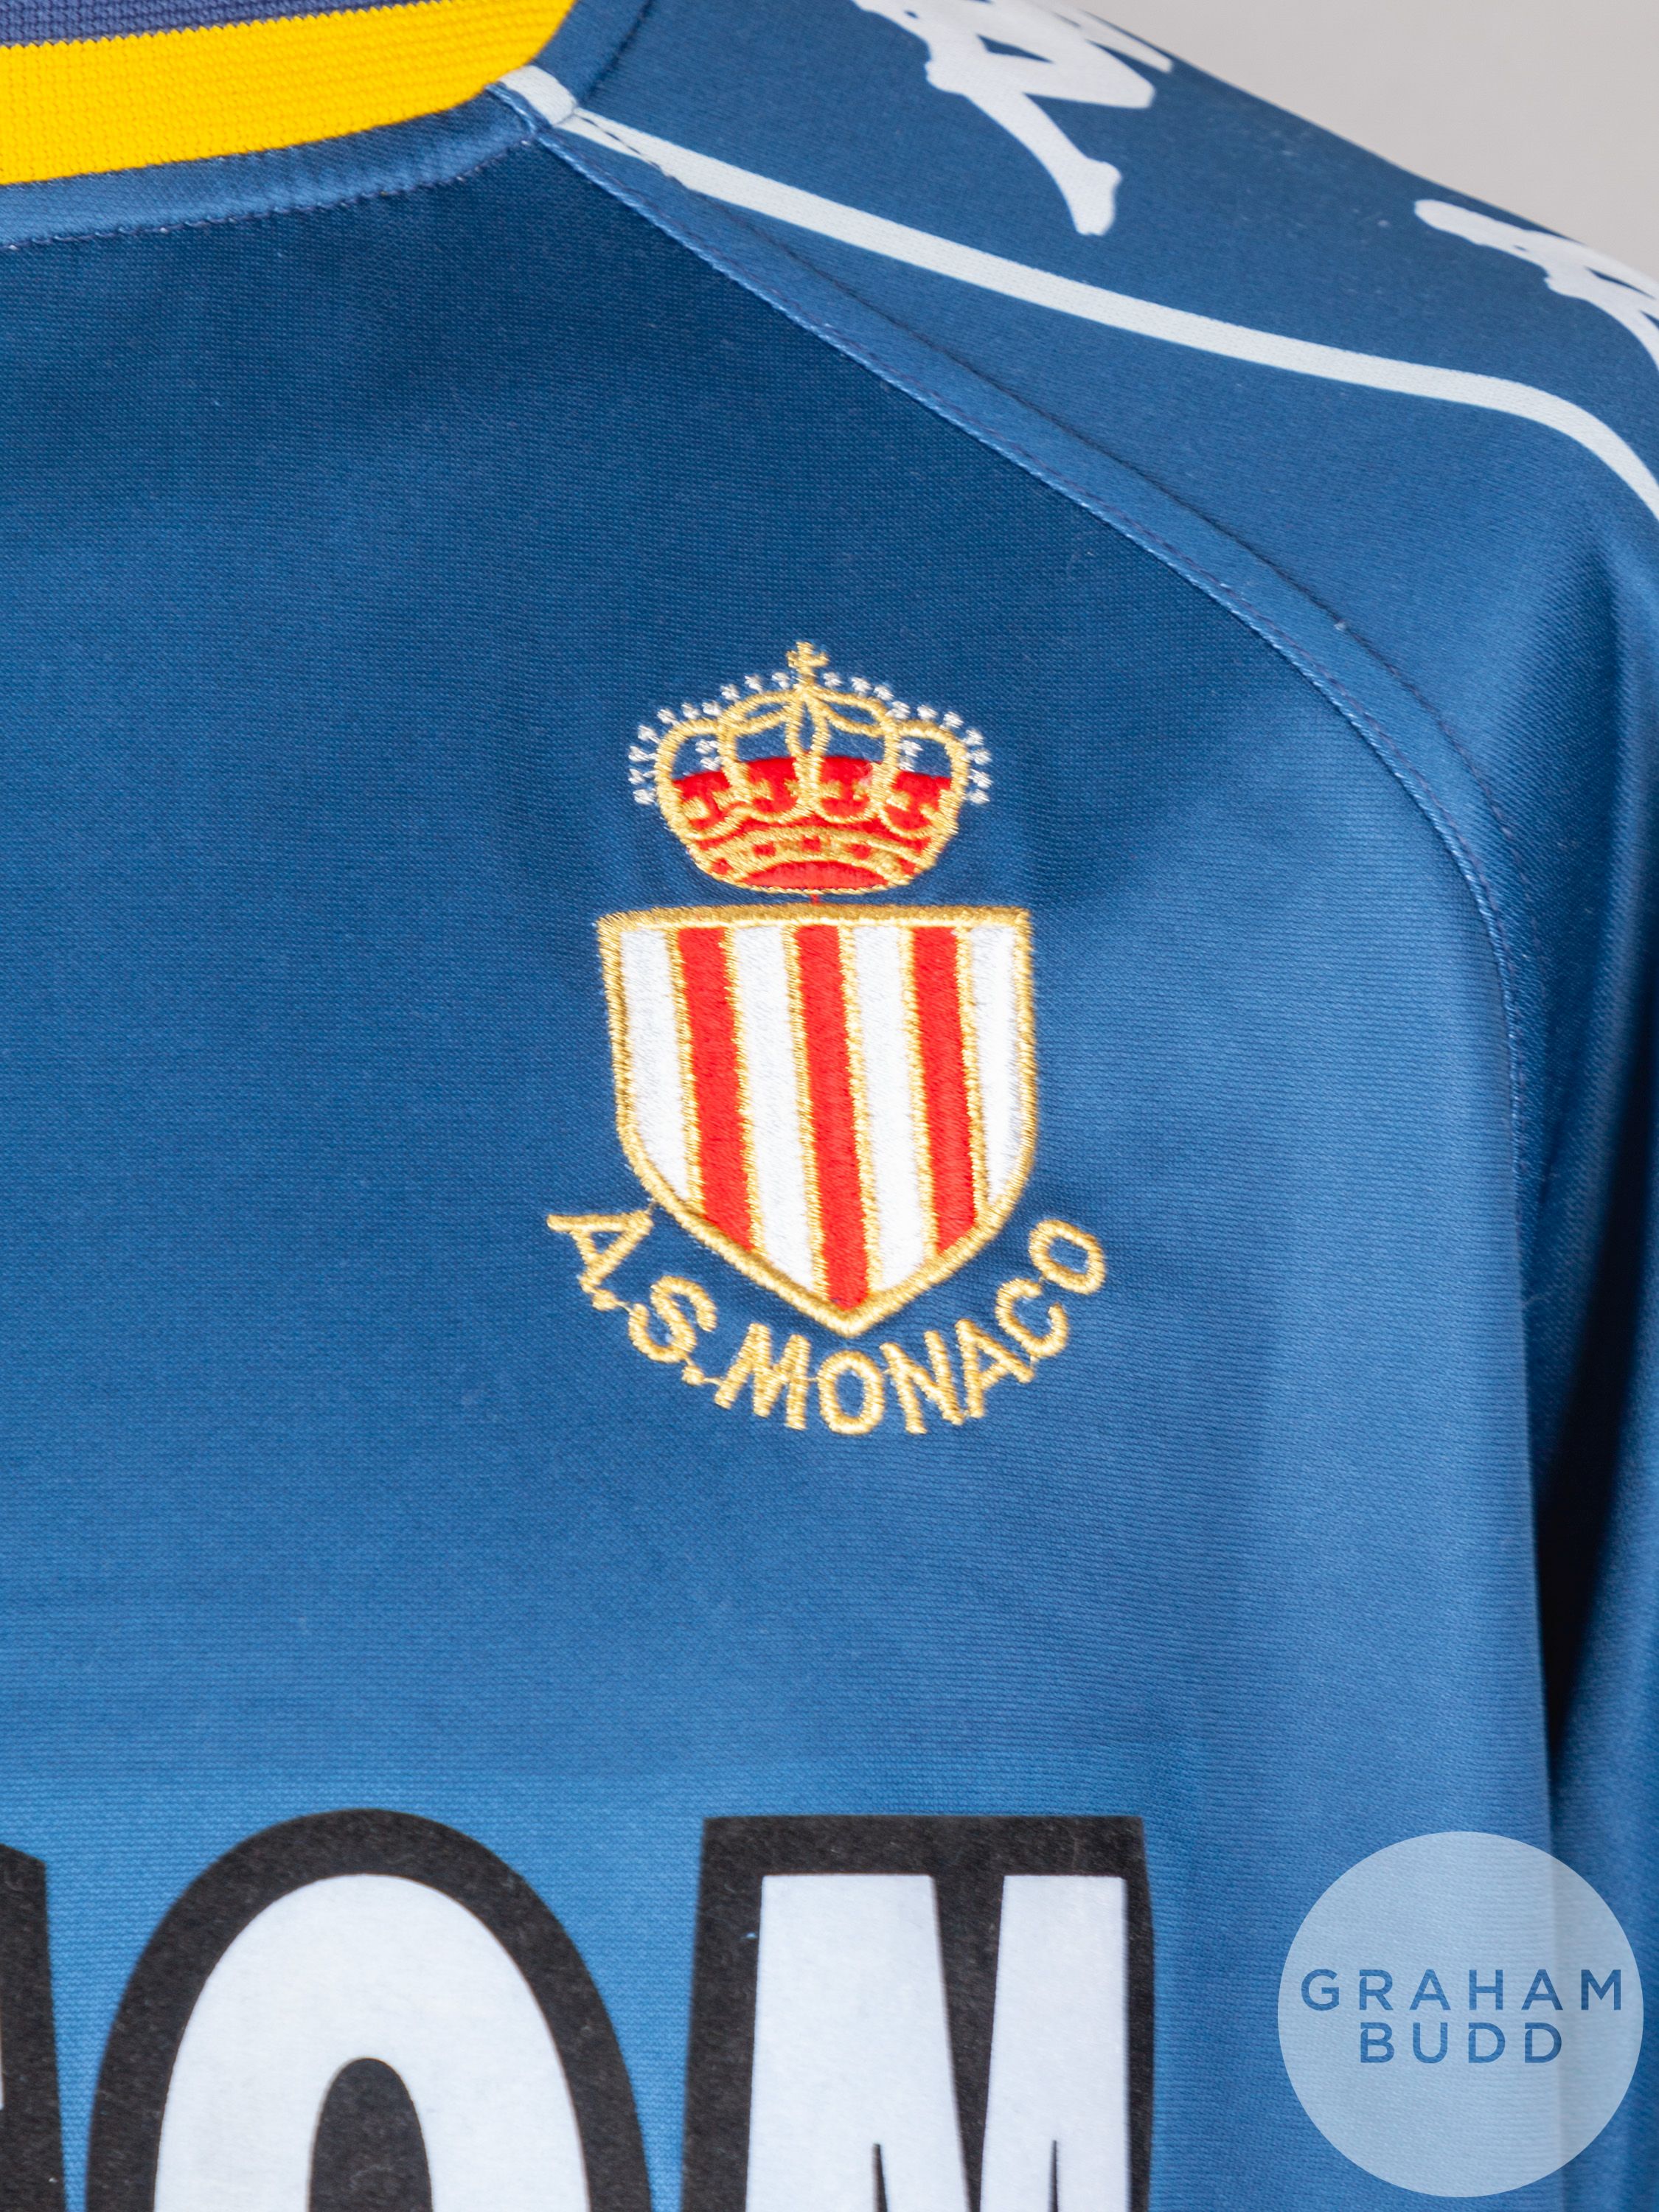 Christophe Pignol, blue and yellow No.3 Monaco long-sleeved shirt, 1999-2000 - Image 3 of 6